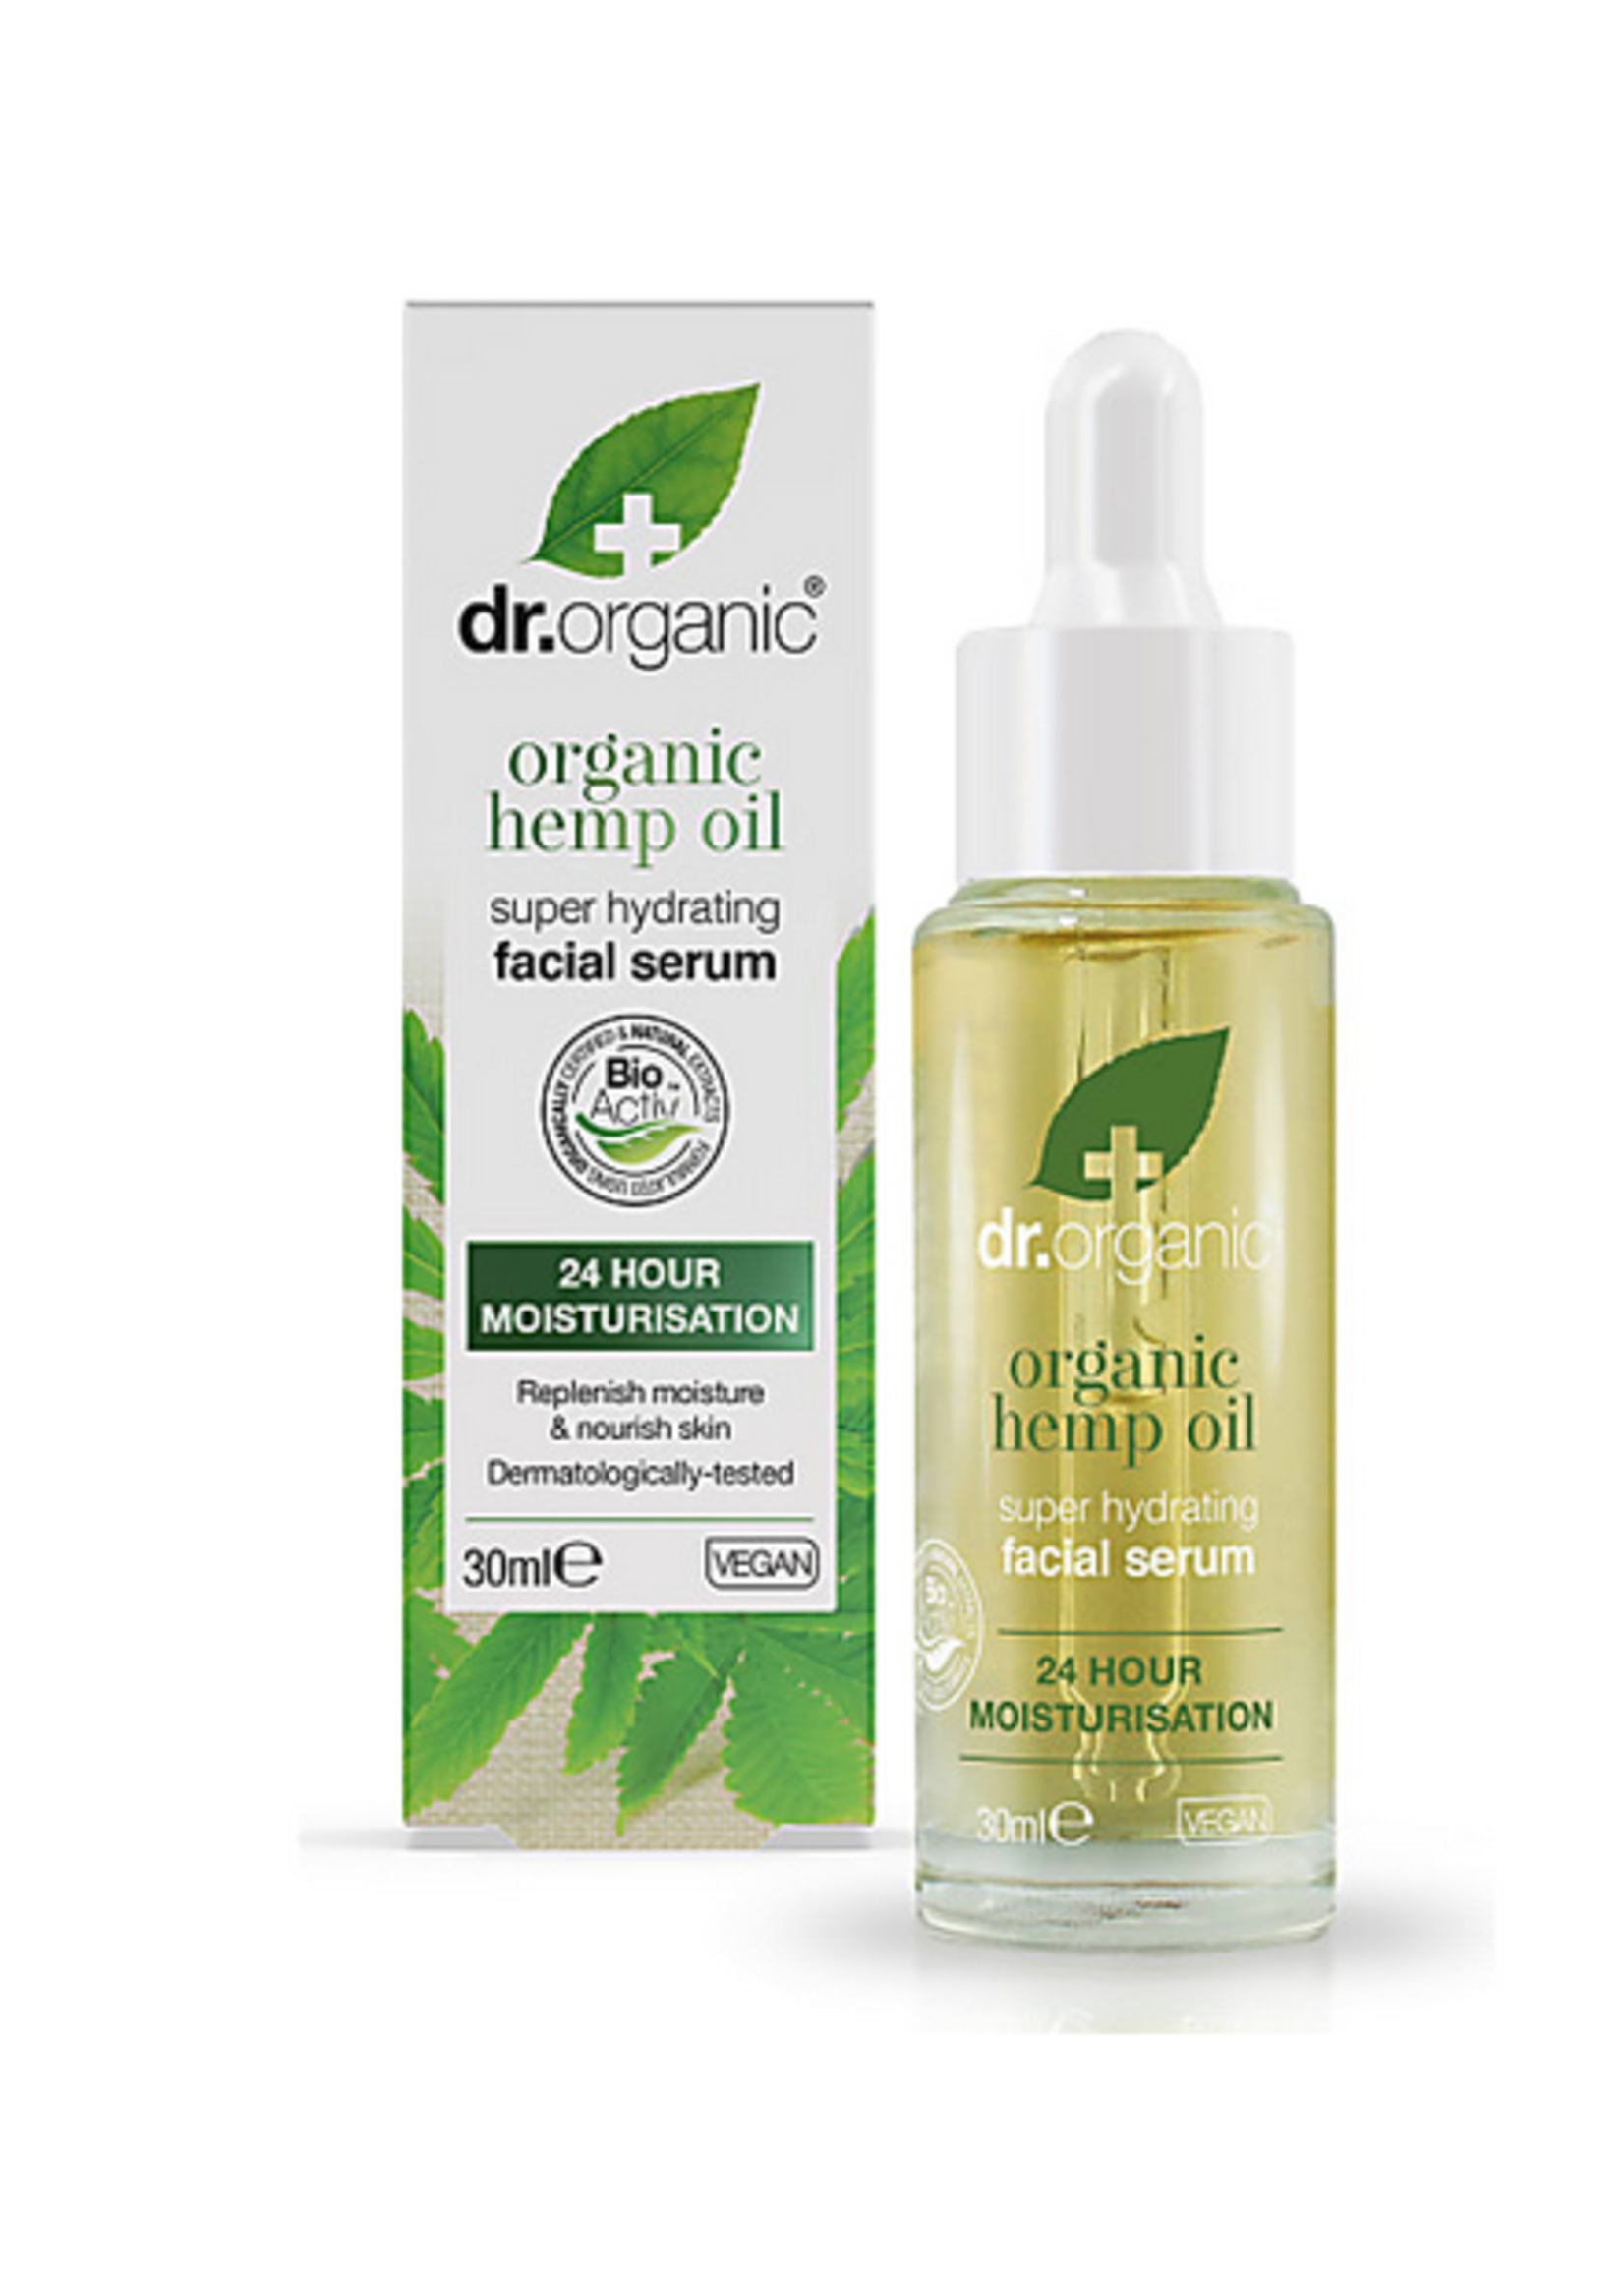 Dr Organic Dr Organic Facial Serum Hemp Oil 30ml